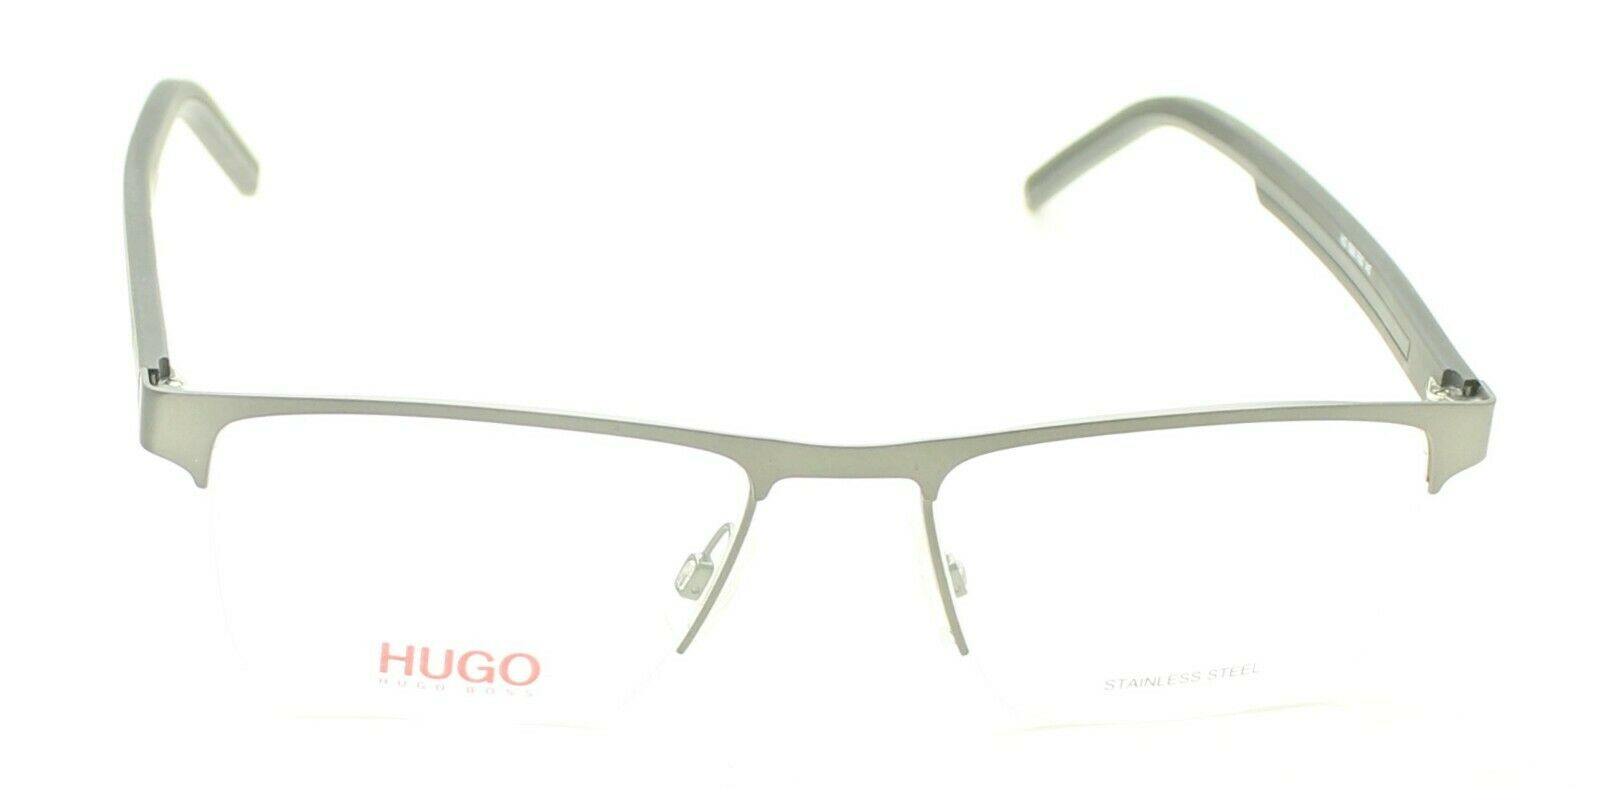 HUGO BOSS HG 1066 R80 55mm Eyewear FRAMES Glasses RX Optical Eyeglasses - New